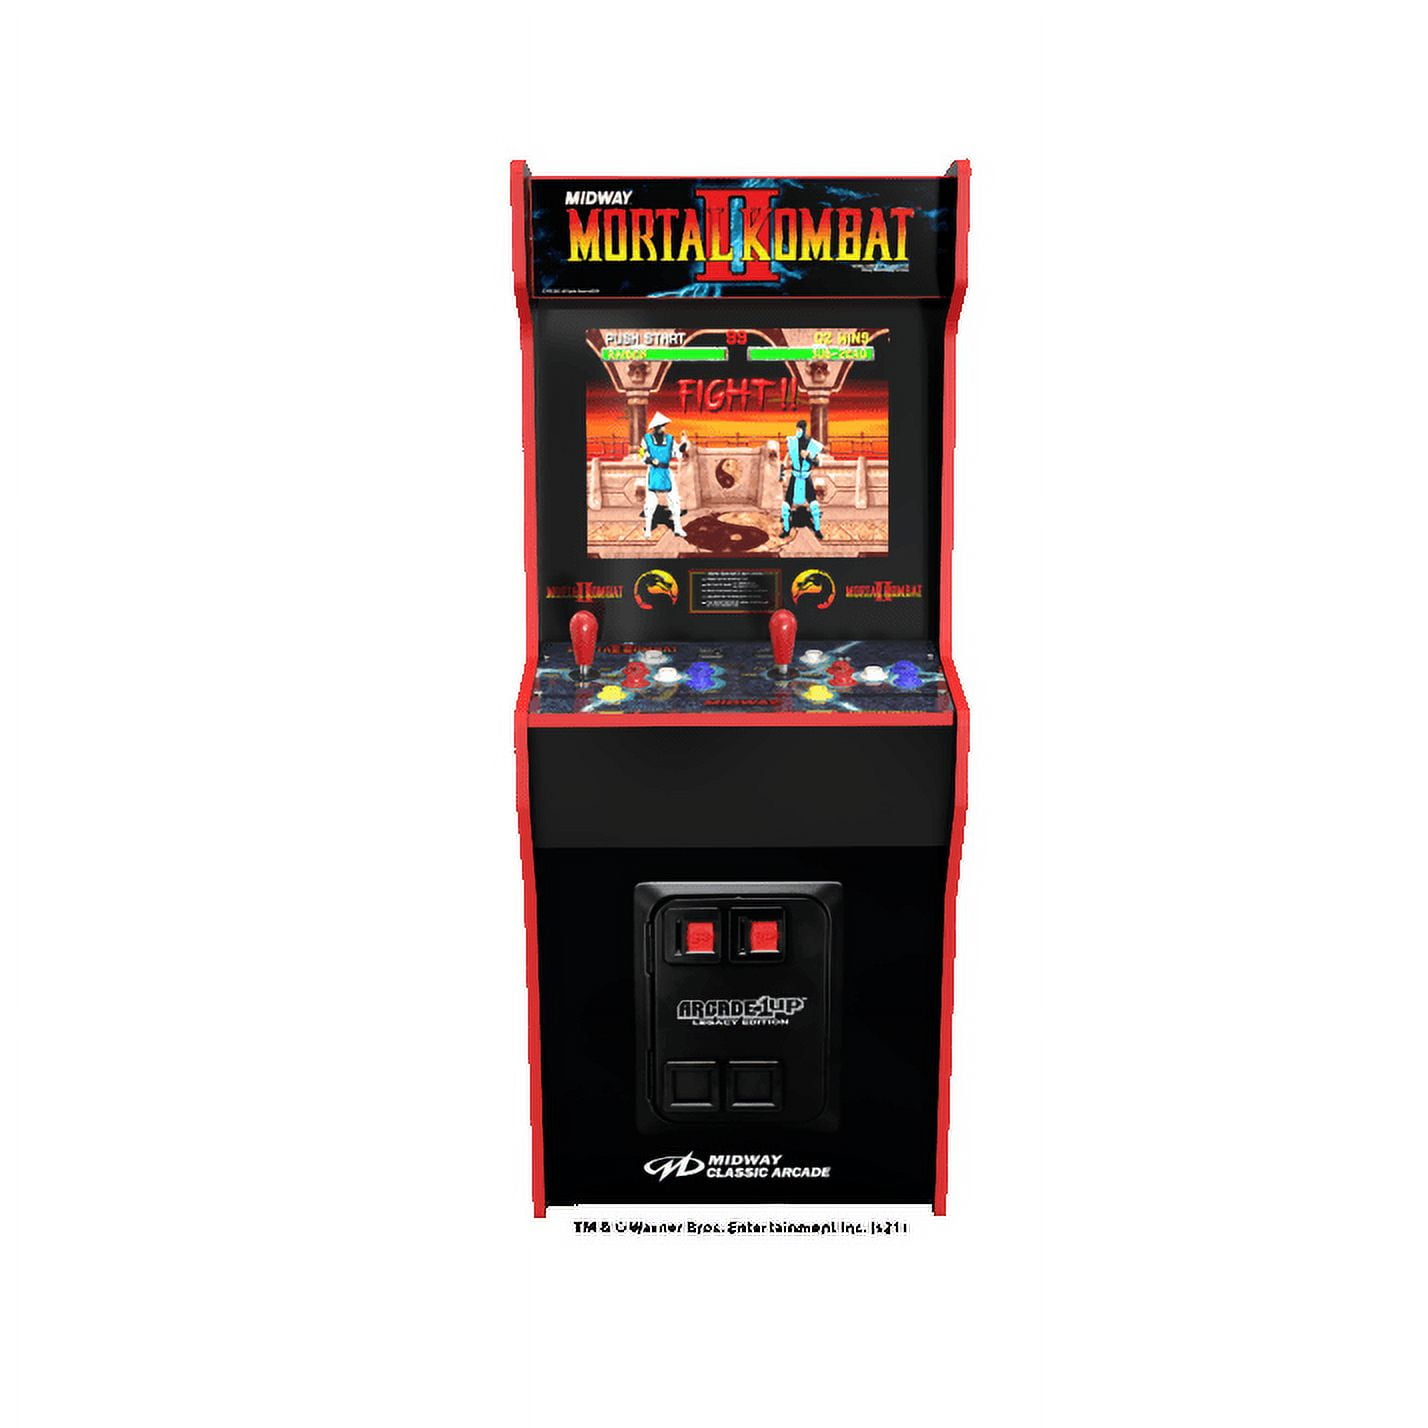 Arcade1Up Pac-Man Legacy 12-in-1 Arcade - Best Buy